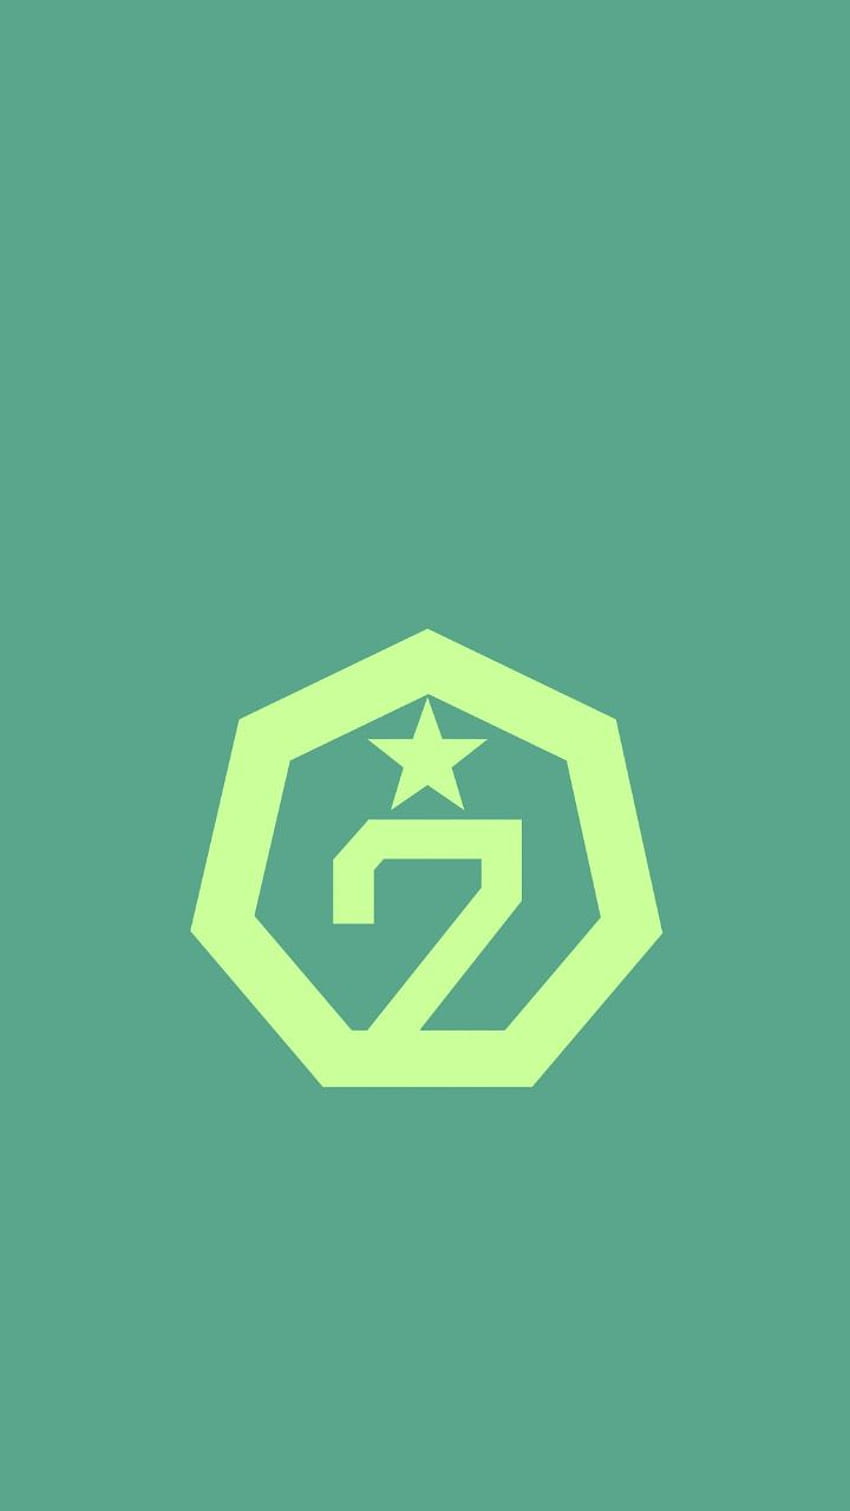 Got7 Galaxy Logo (Ver.2)